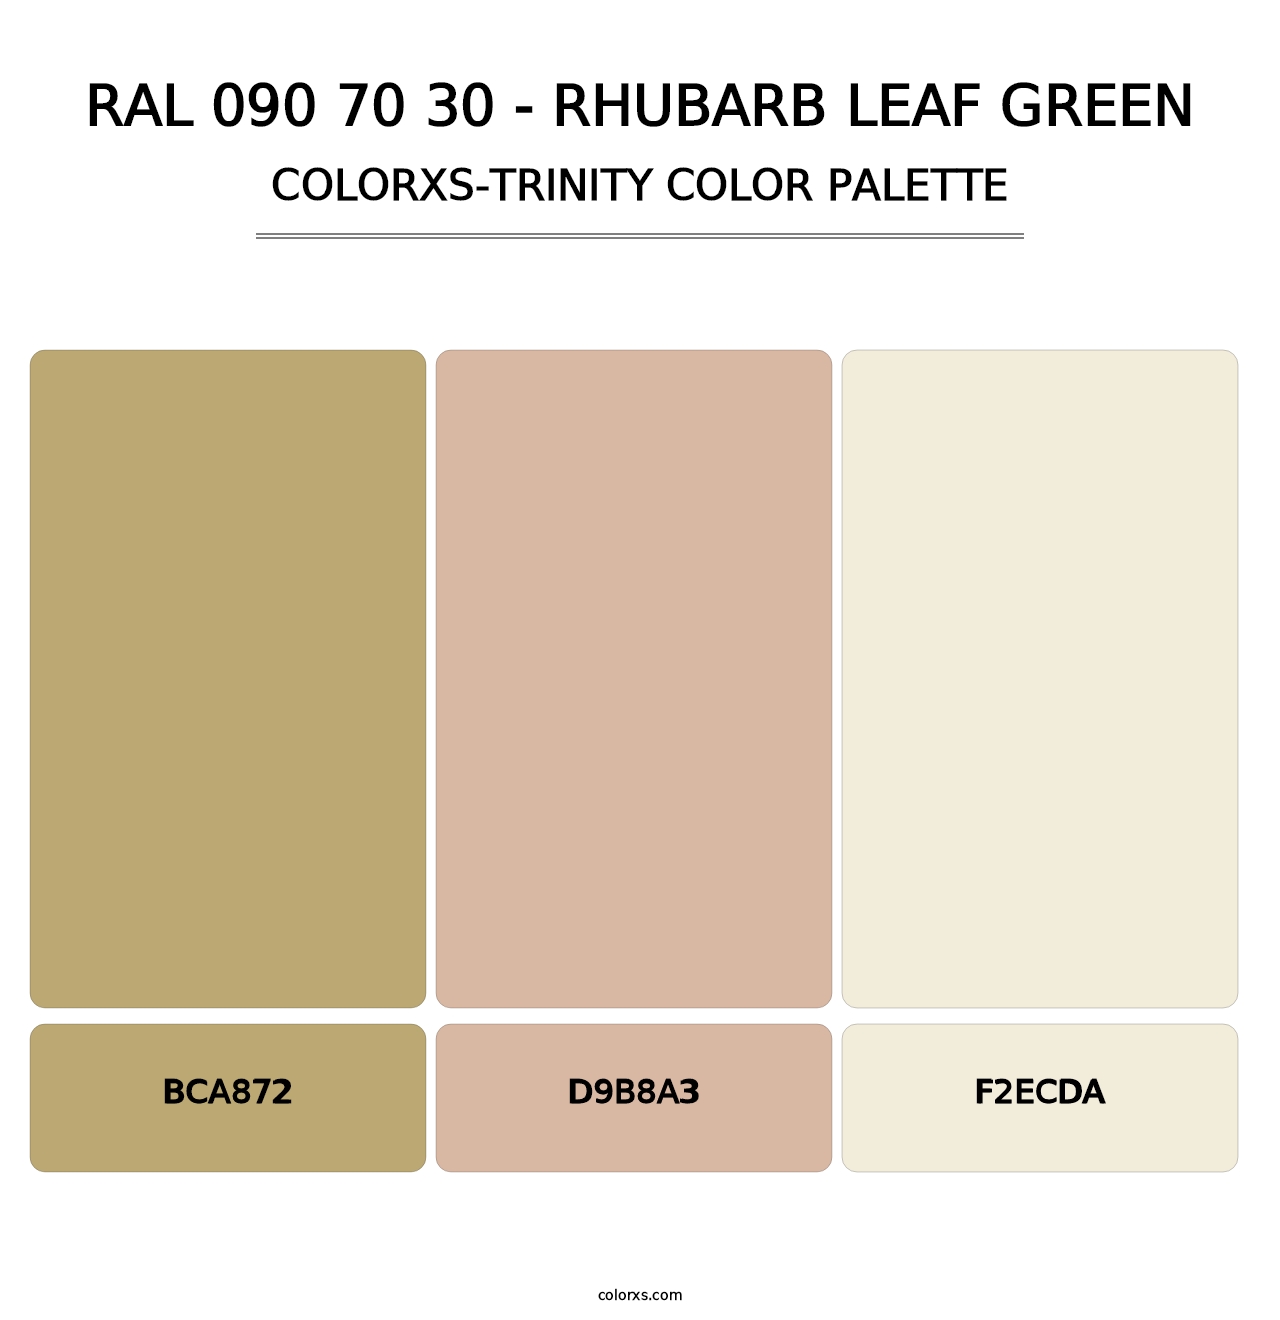 RAL 090 70 30 - Rhubarb Leaf Green - Colorxs Trinity Palette